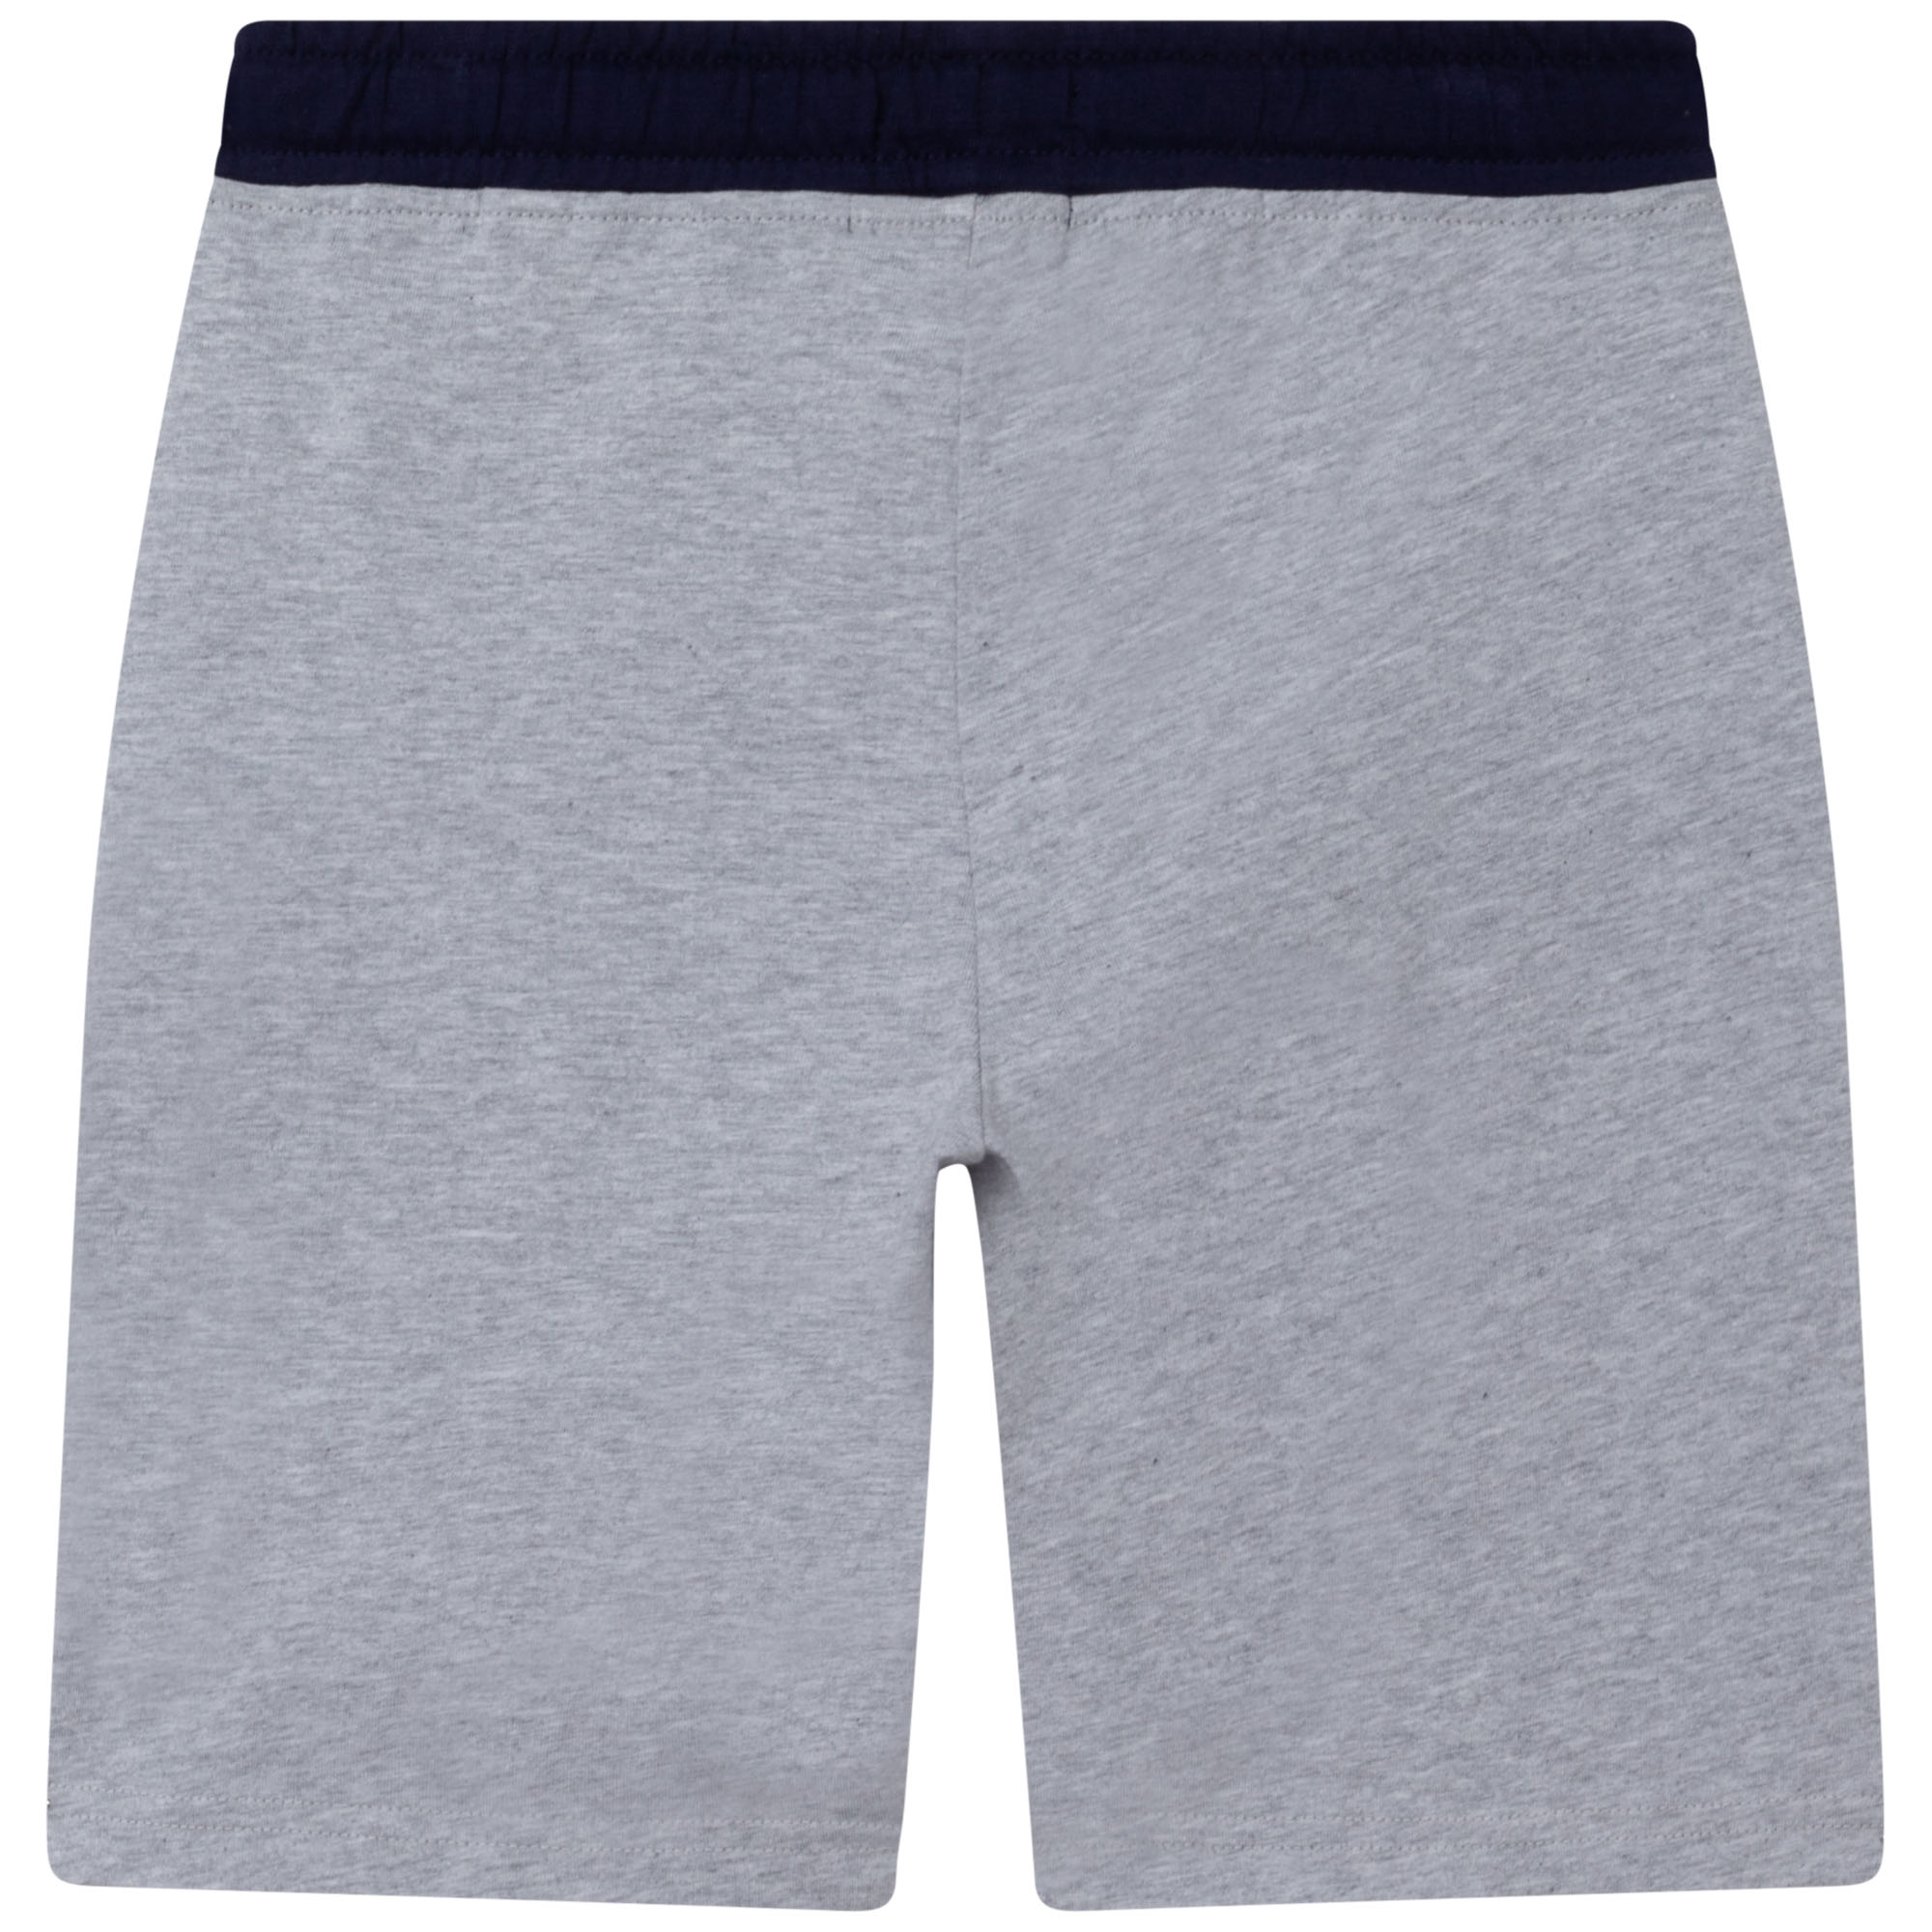 T-shirt and Bermuda shorts set TIMBERLAND for BOY